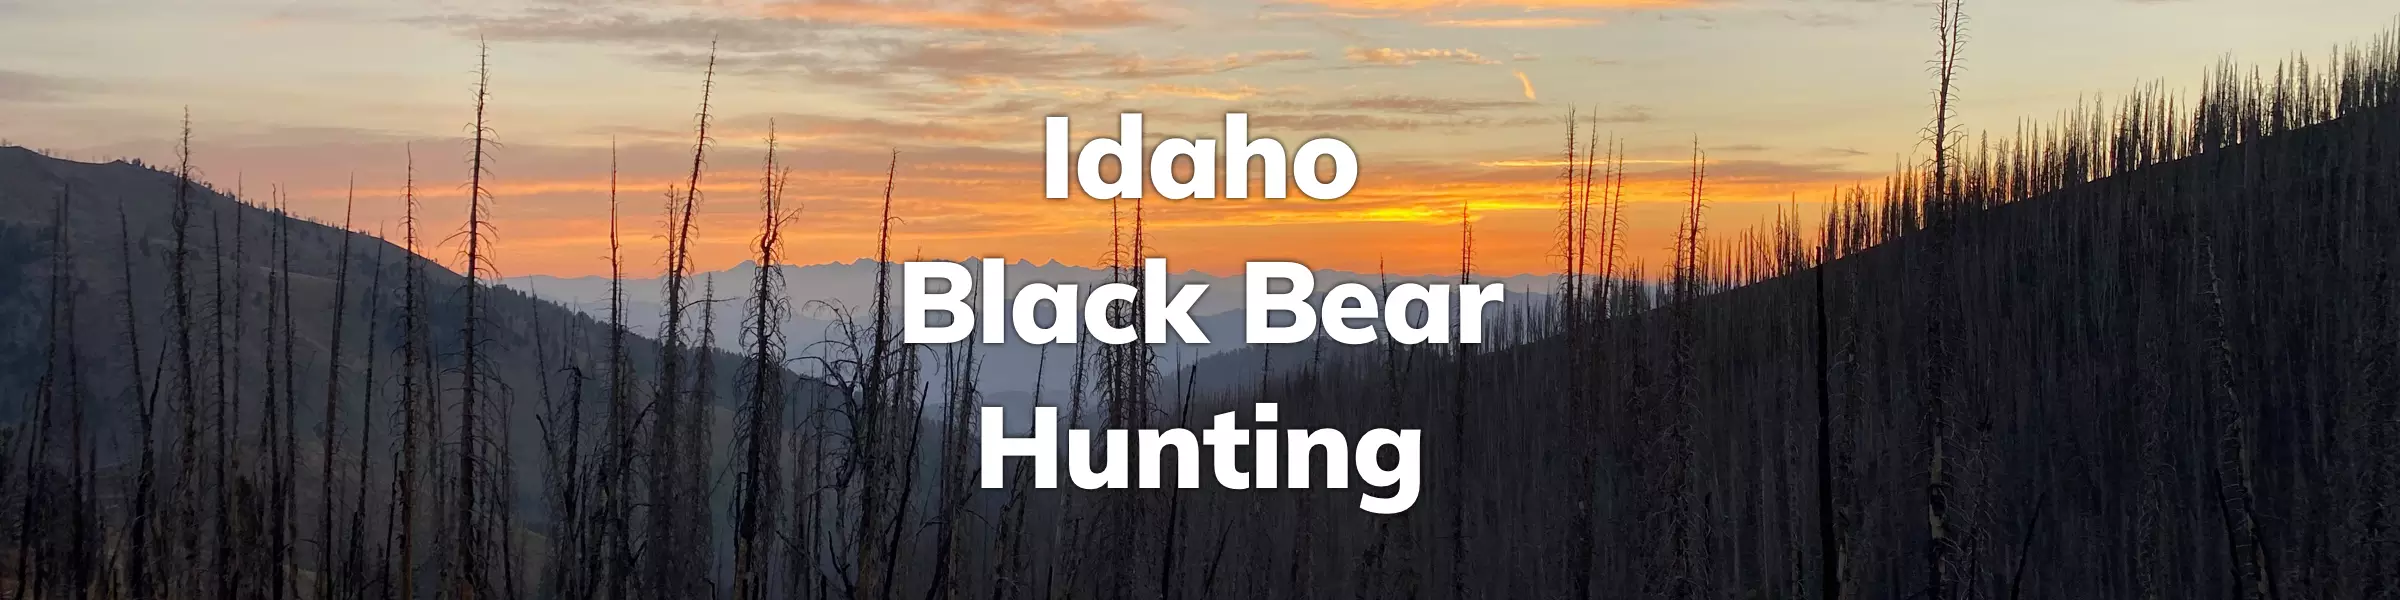 Idaho Black Bear Hunting